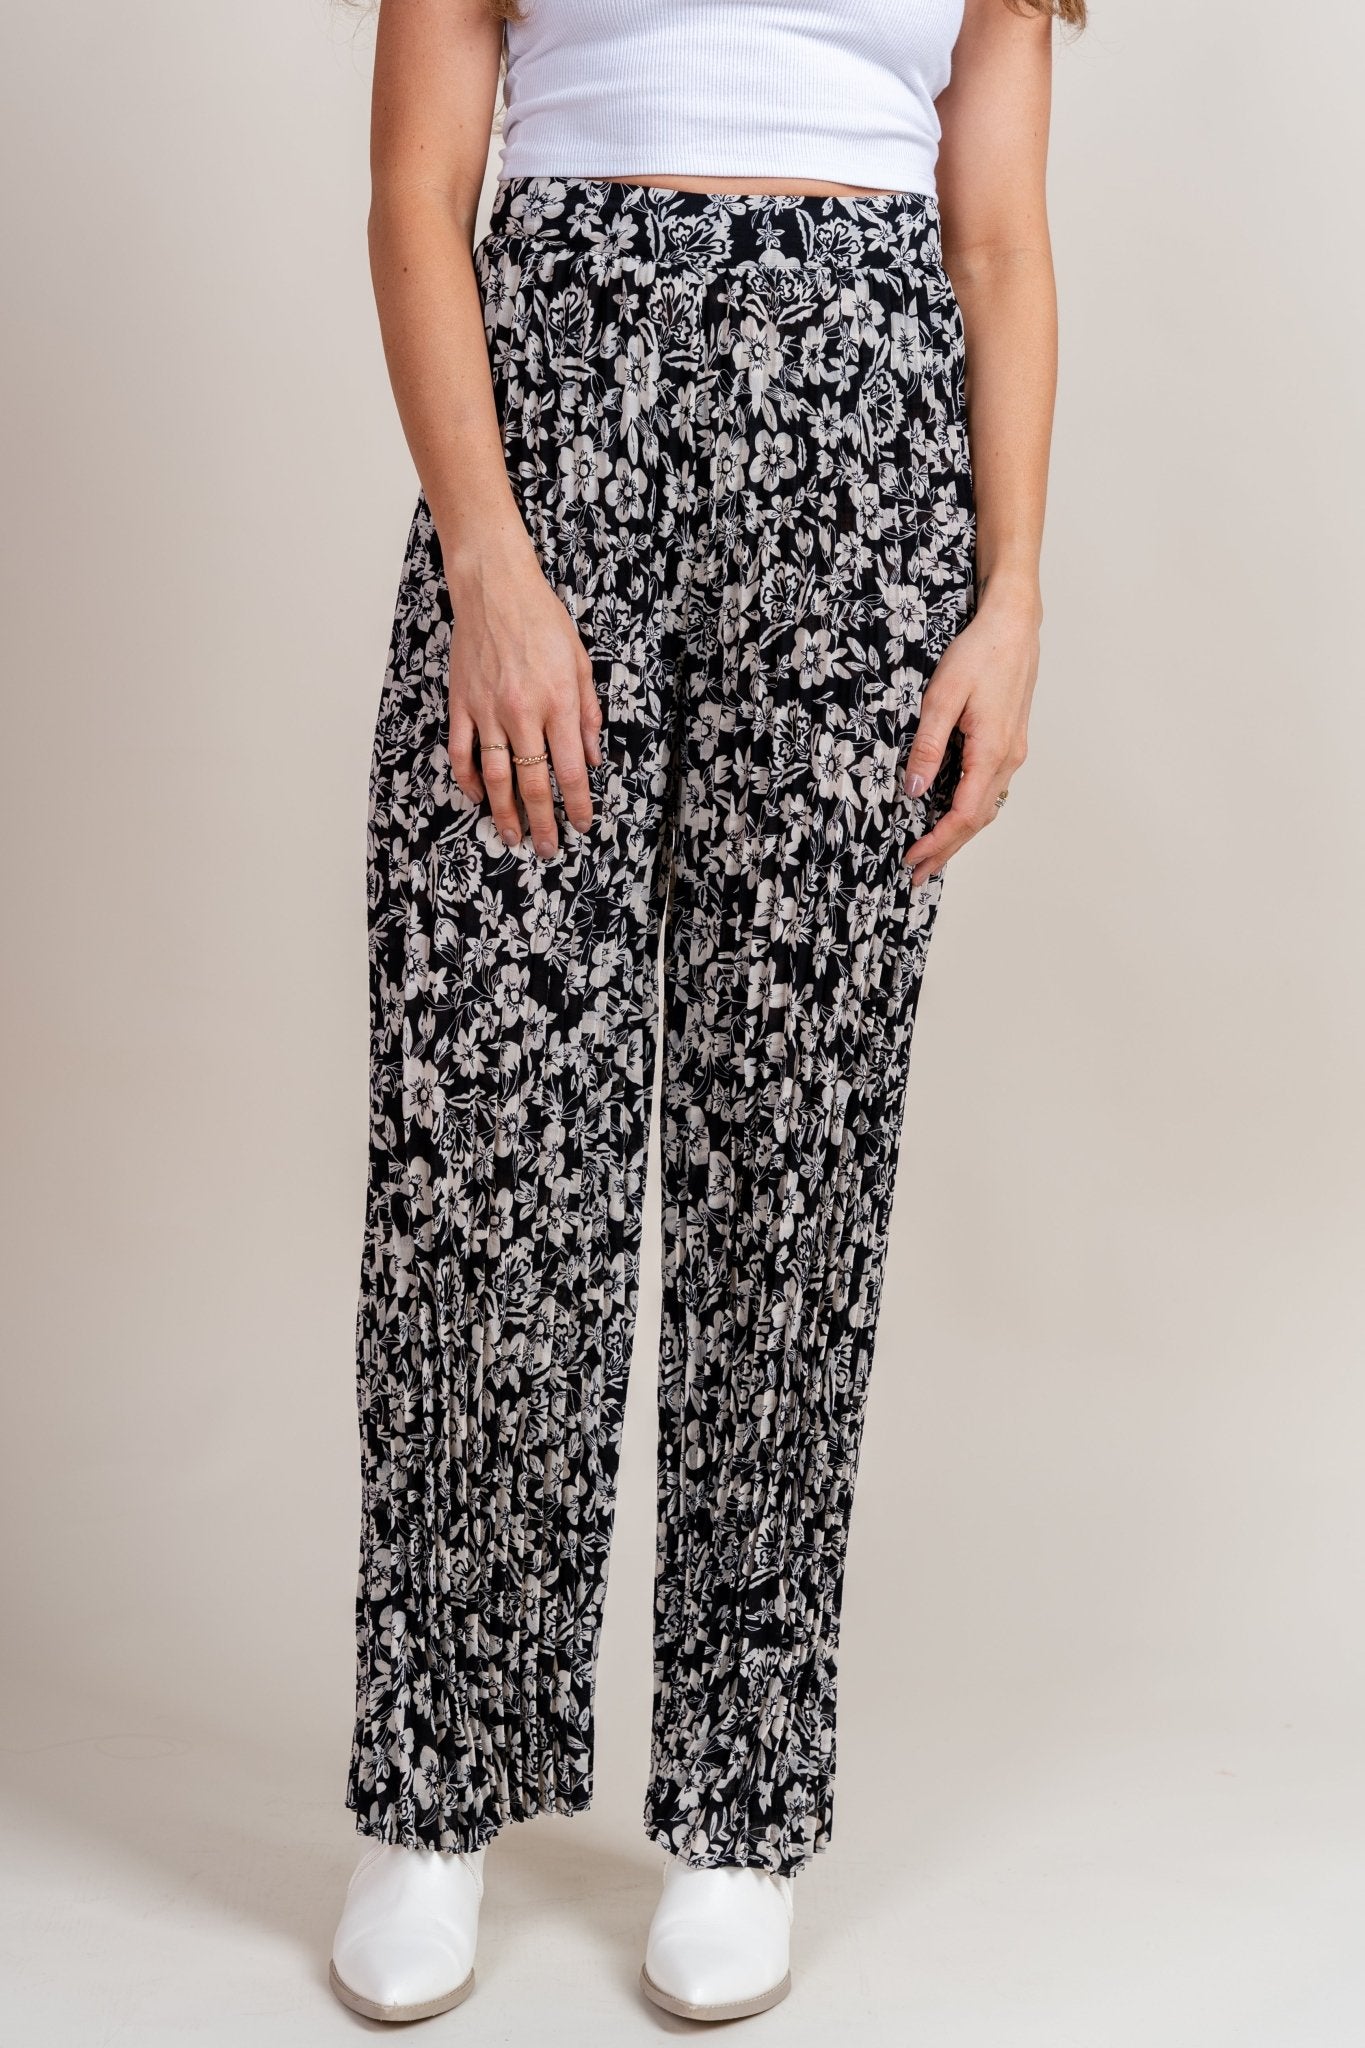 Pleated floral pants black floral | Lush Fashion Lounge: women's boutique pants, boutique women's pants, affordable boutique pants, women's fashion pants